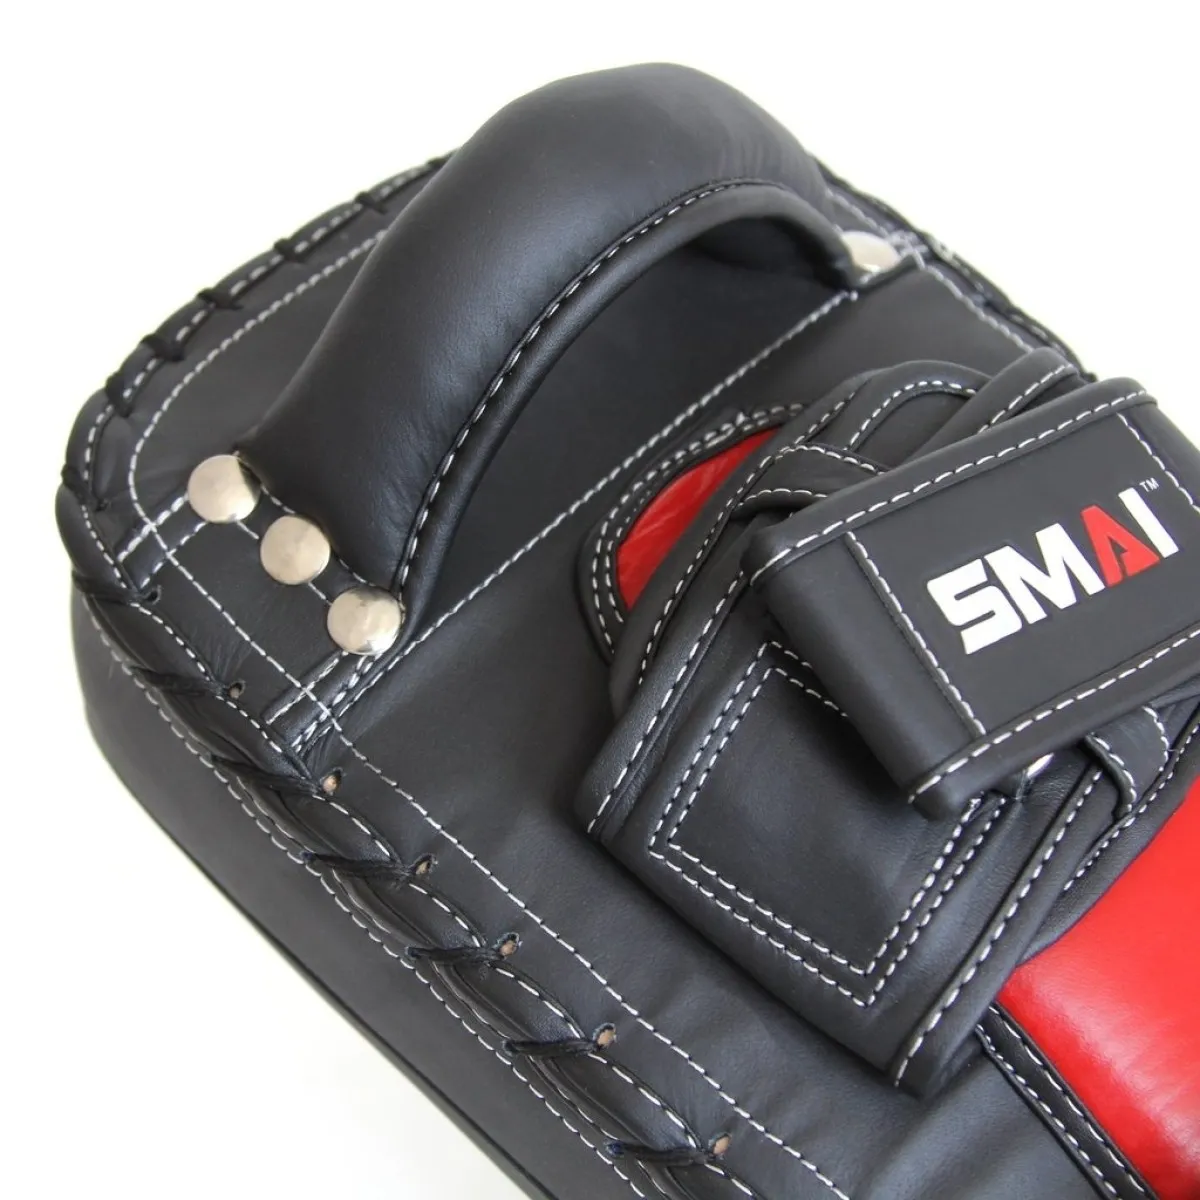 SMAI Elite Thai Pads arm pads, black